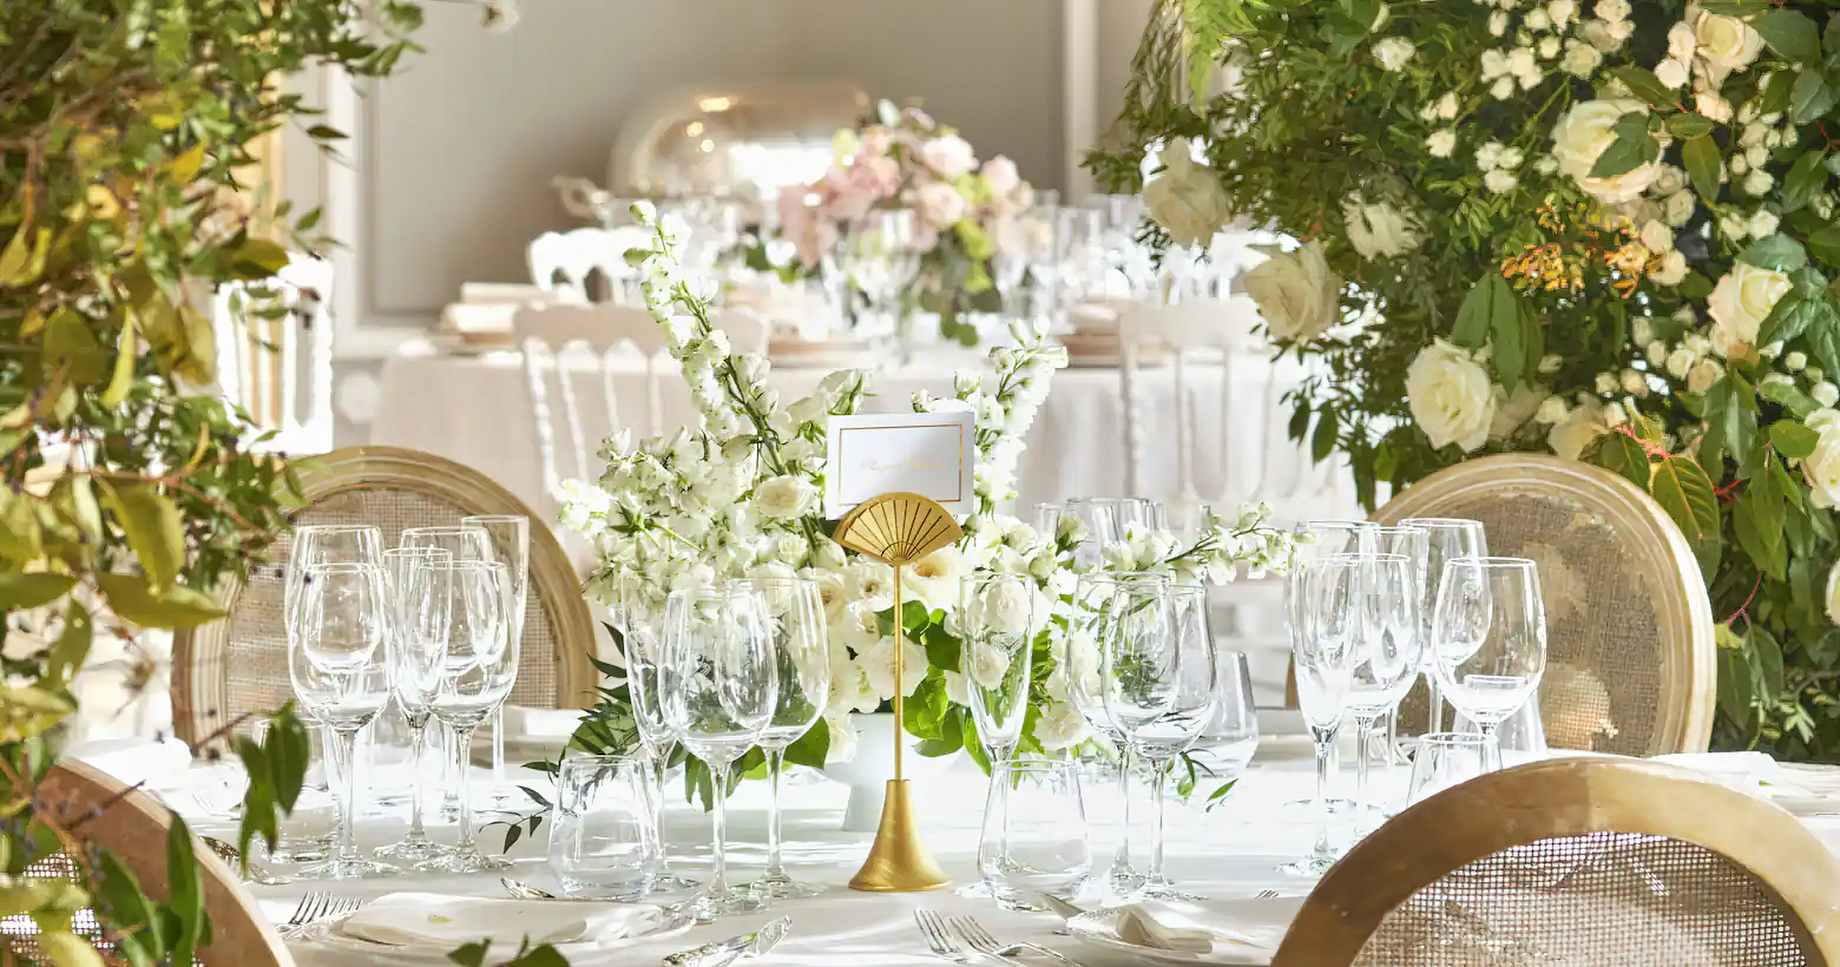 Mandarin Oriental Ritz, Madrid Hotel - Madrid, Spain - Wedding Reception Table